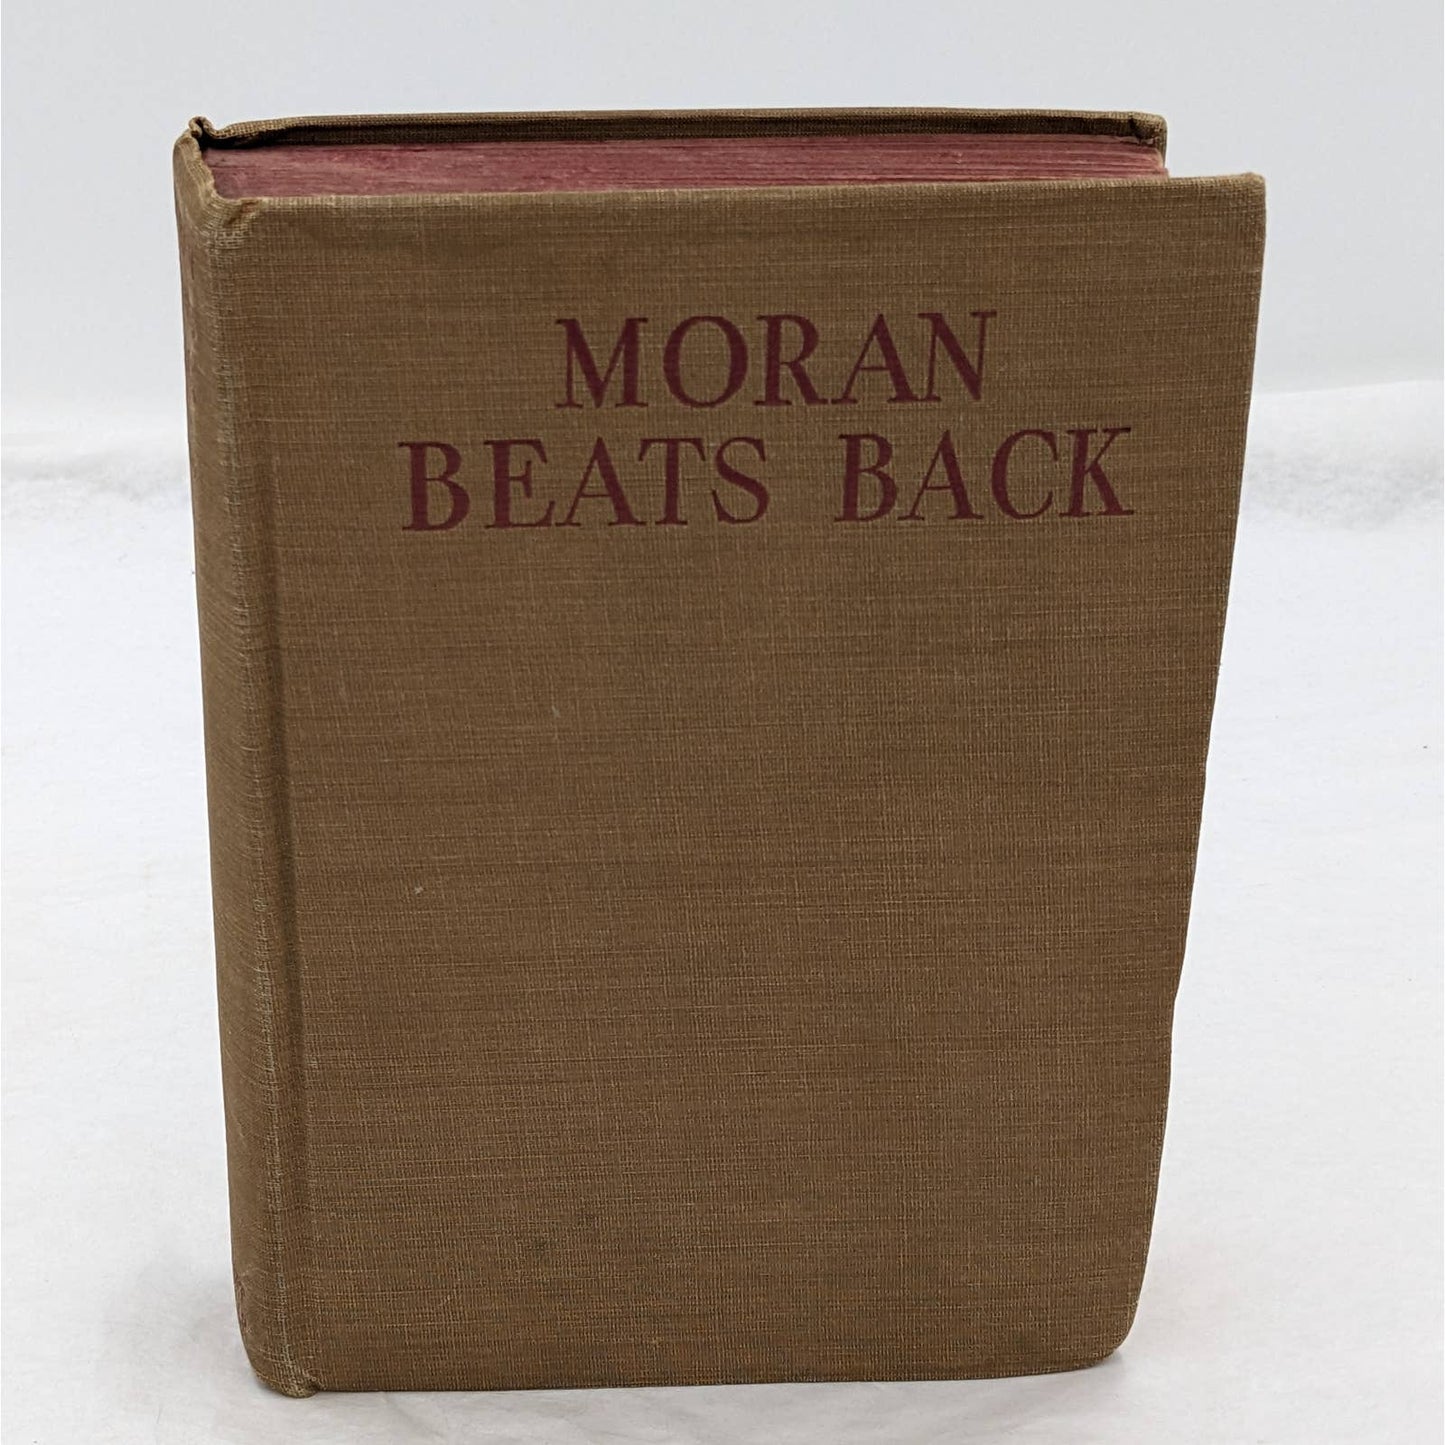 Moran Beats Back By William Macleod Raine Vintage Book Adventure Old West 1939